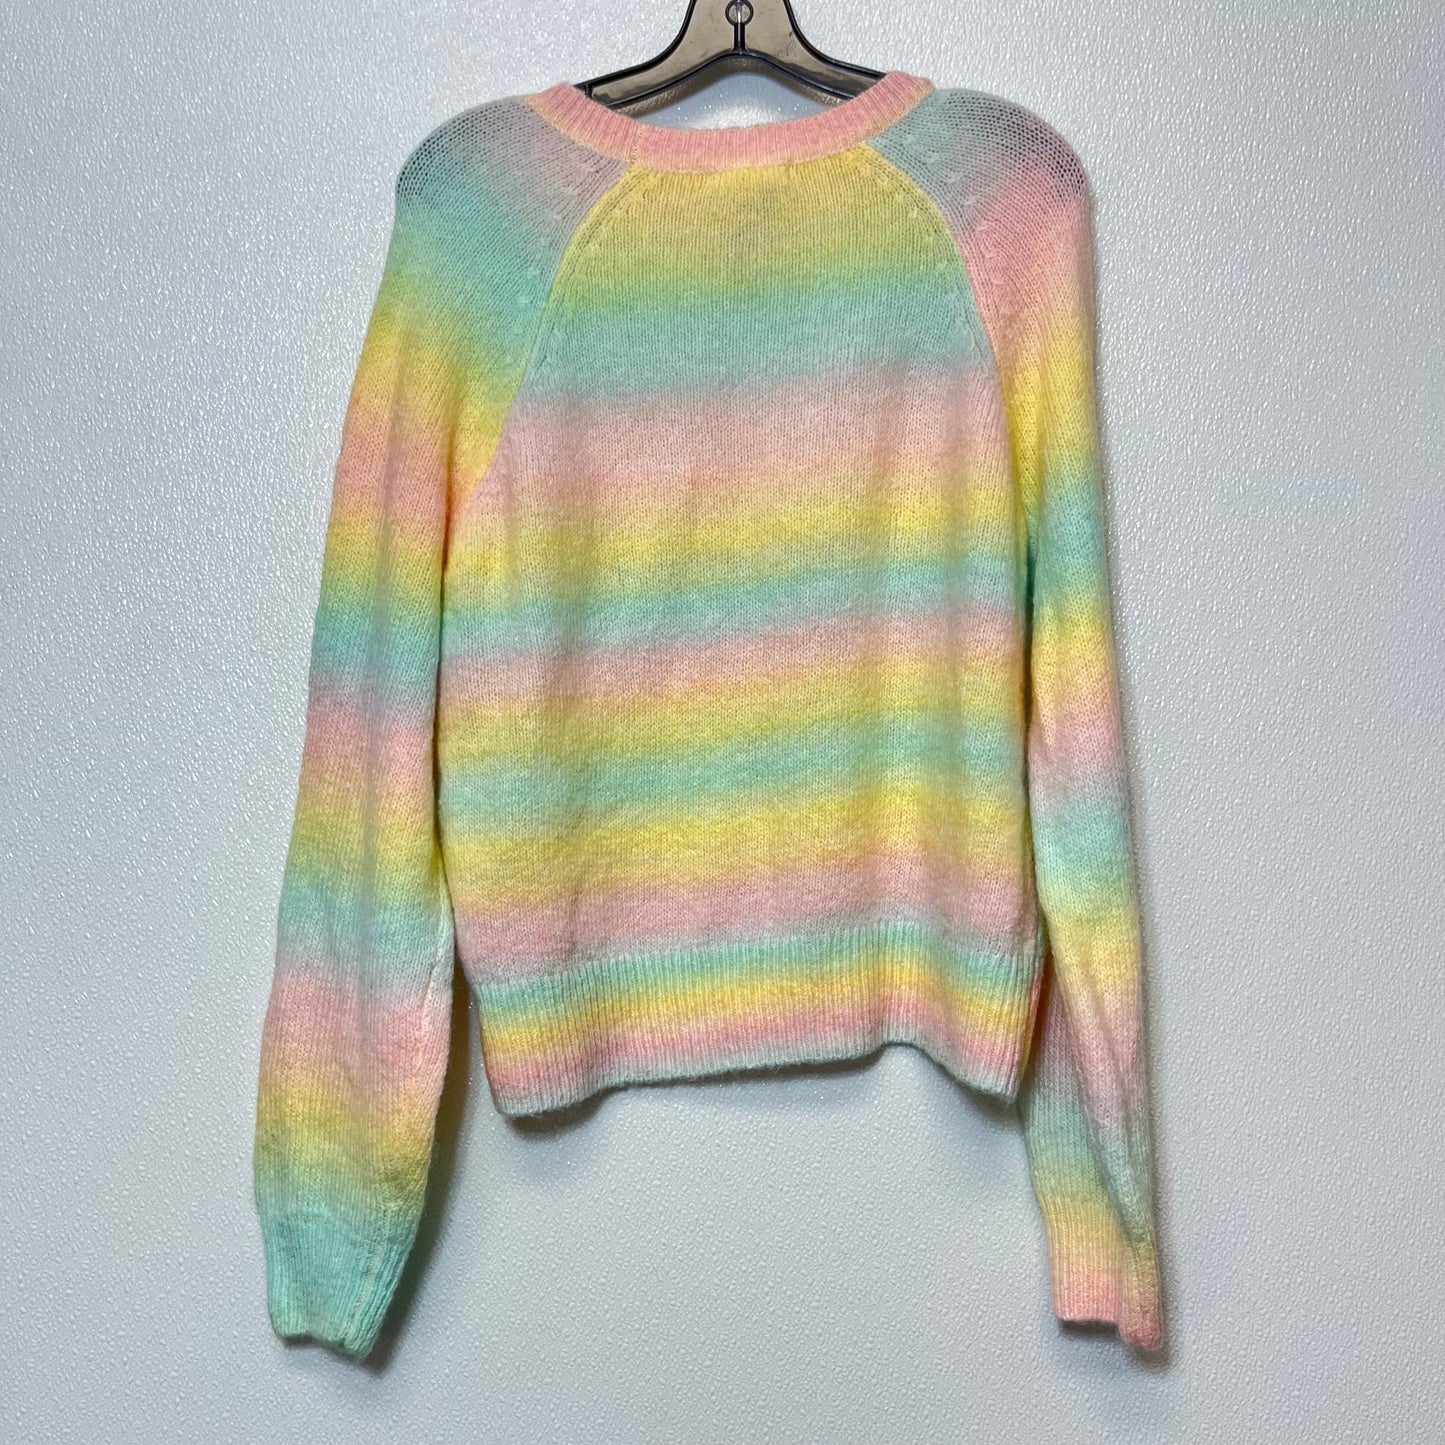 Sweater By Bb Dakota  Size: L